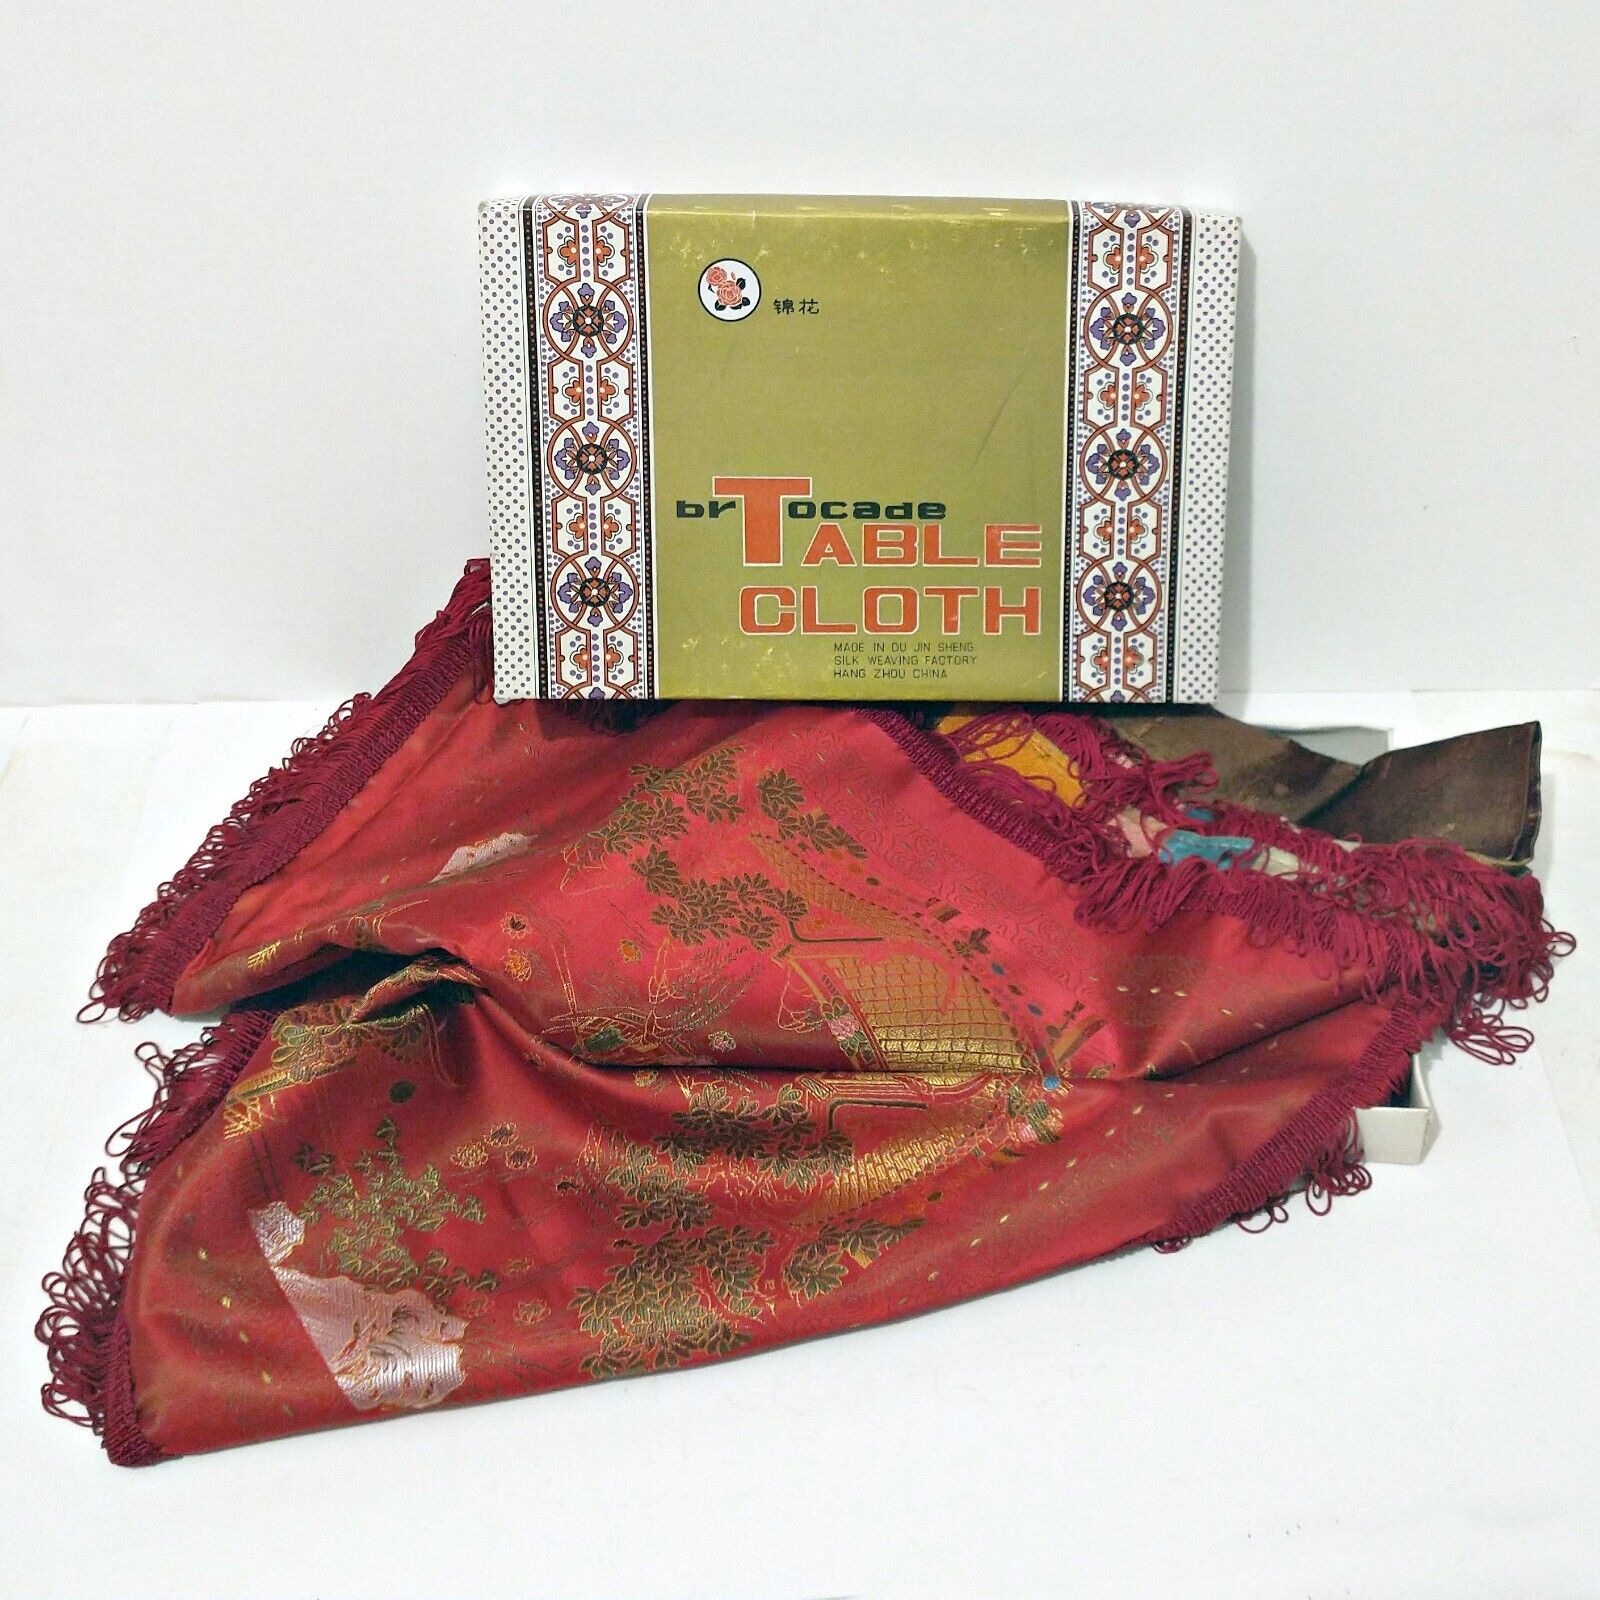 Vintage Brocade Chinese Silk Table Cloth - 39 x 38 - Original Box - Never Used